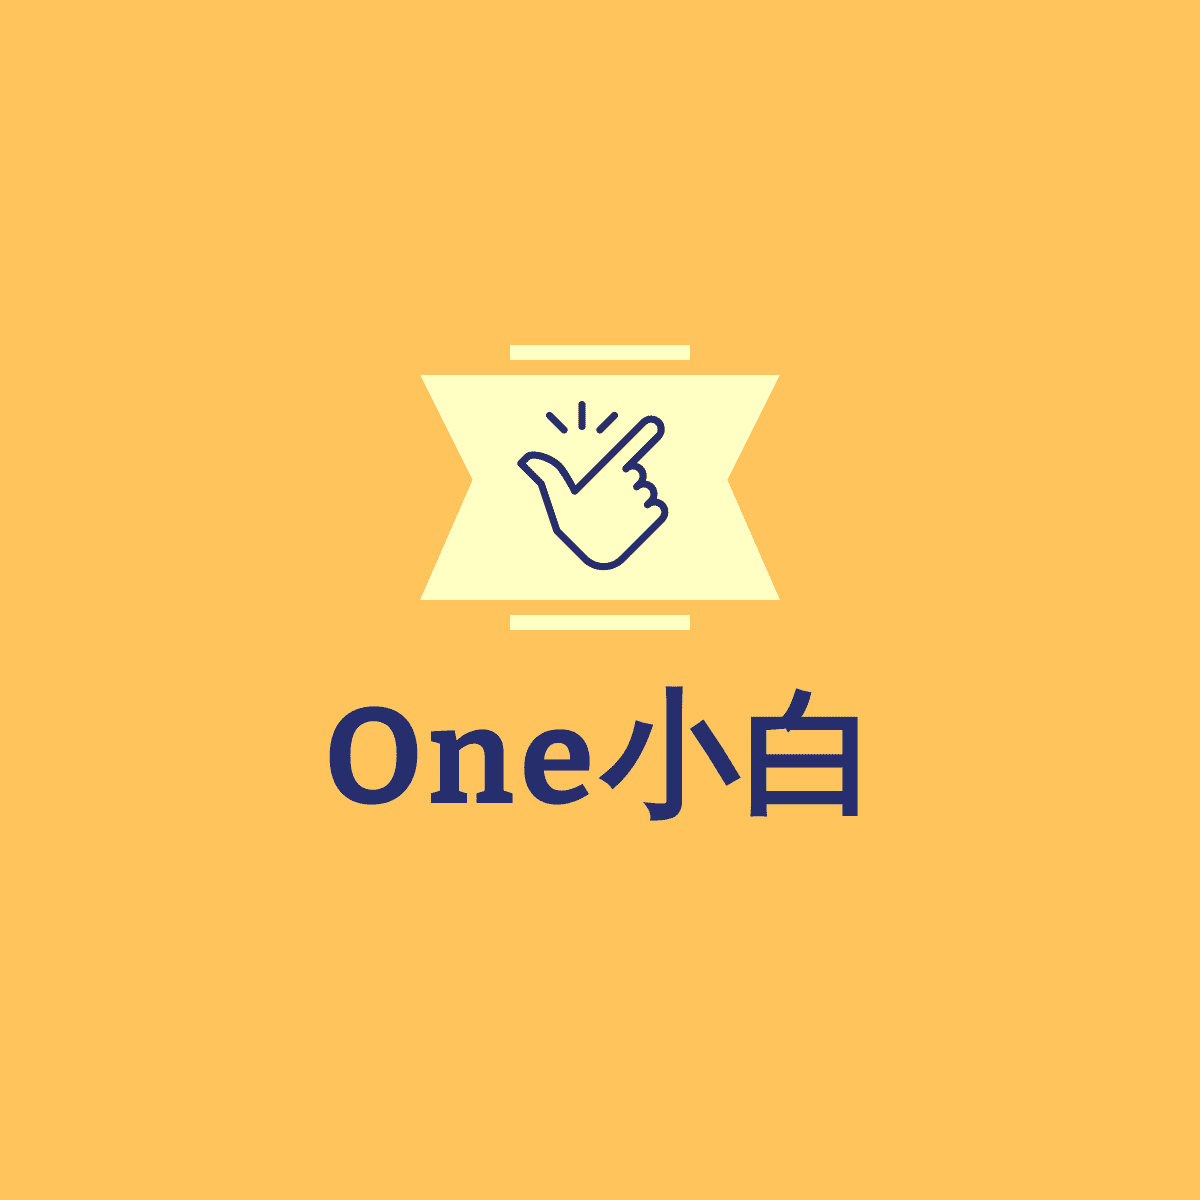 One小白